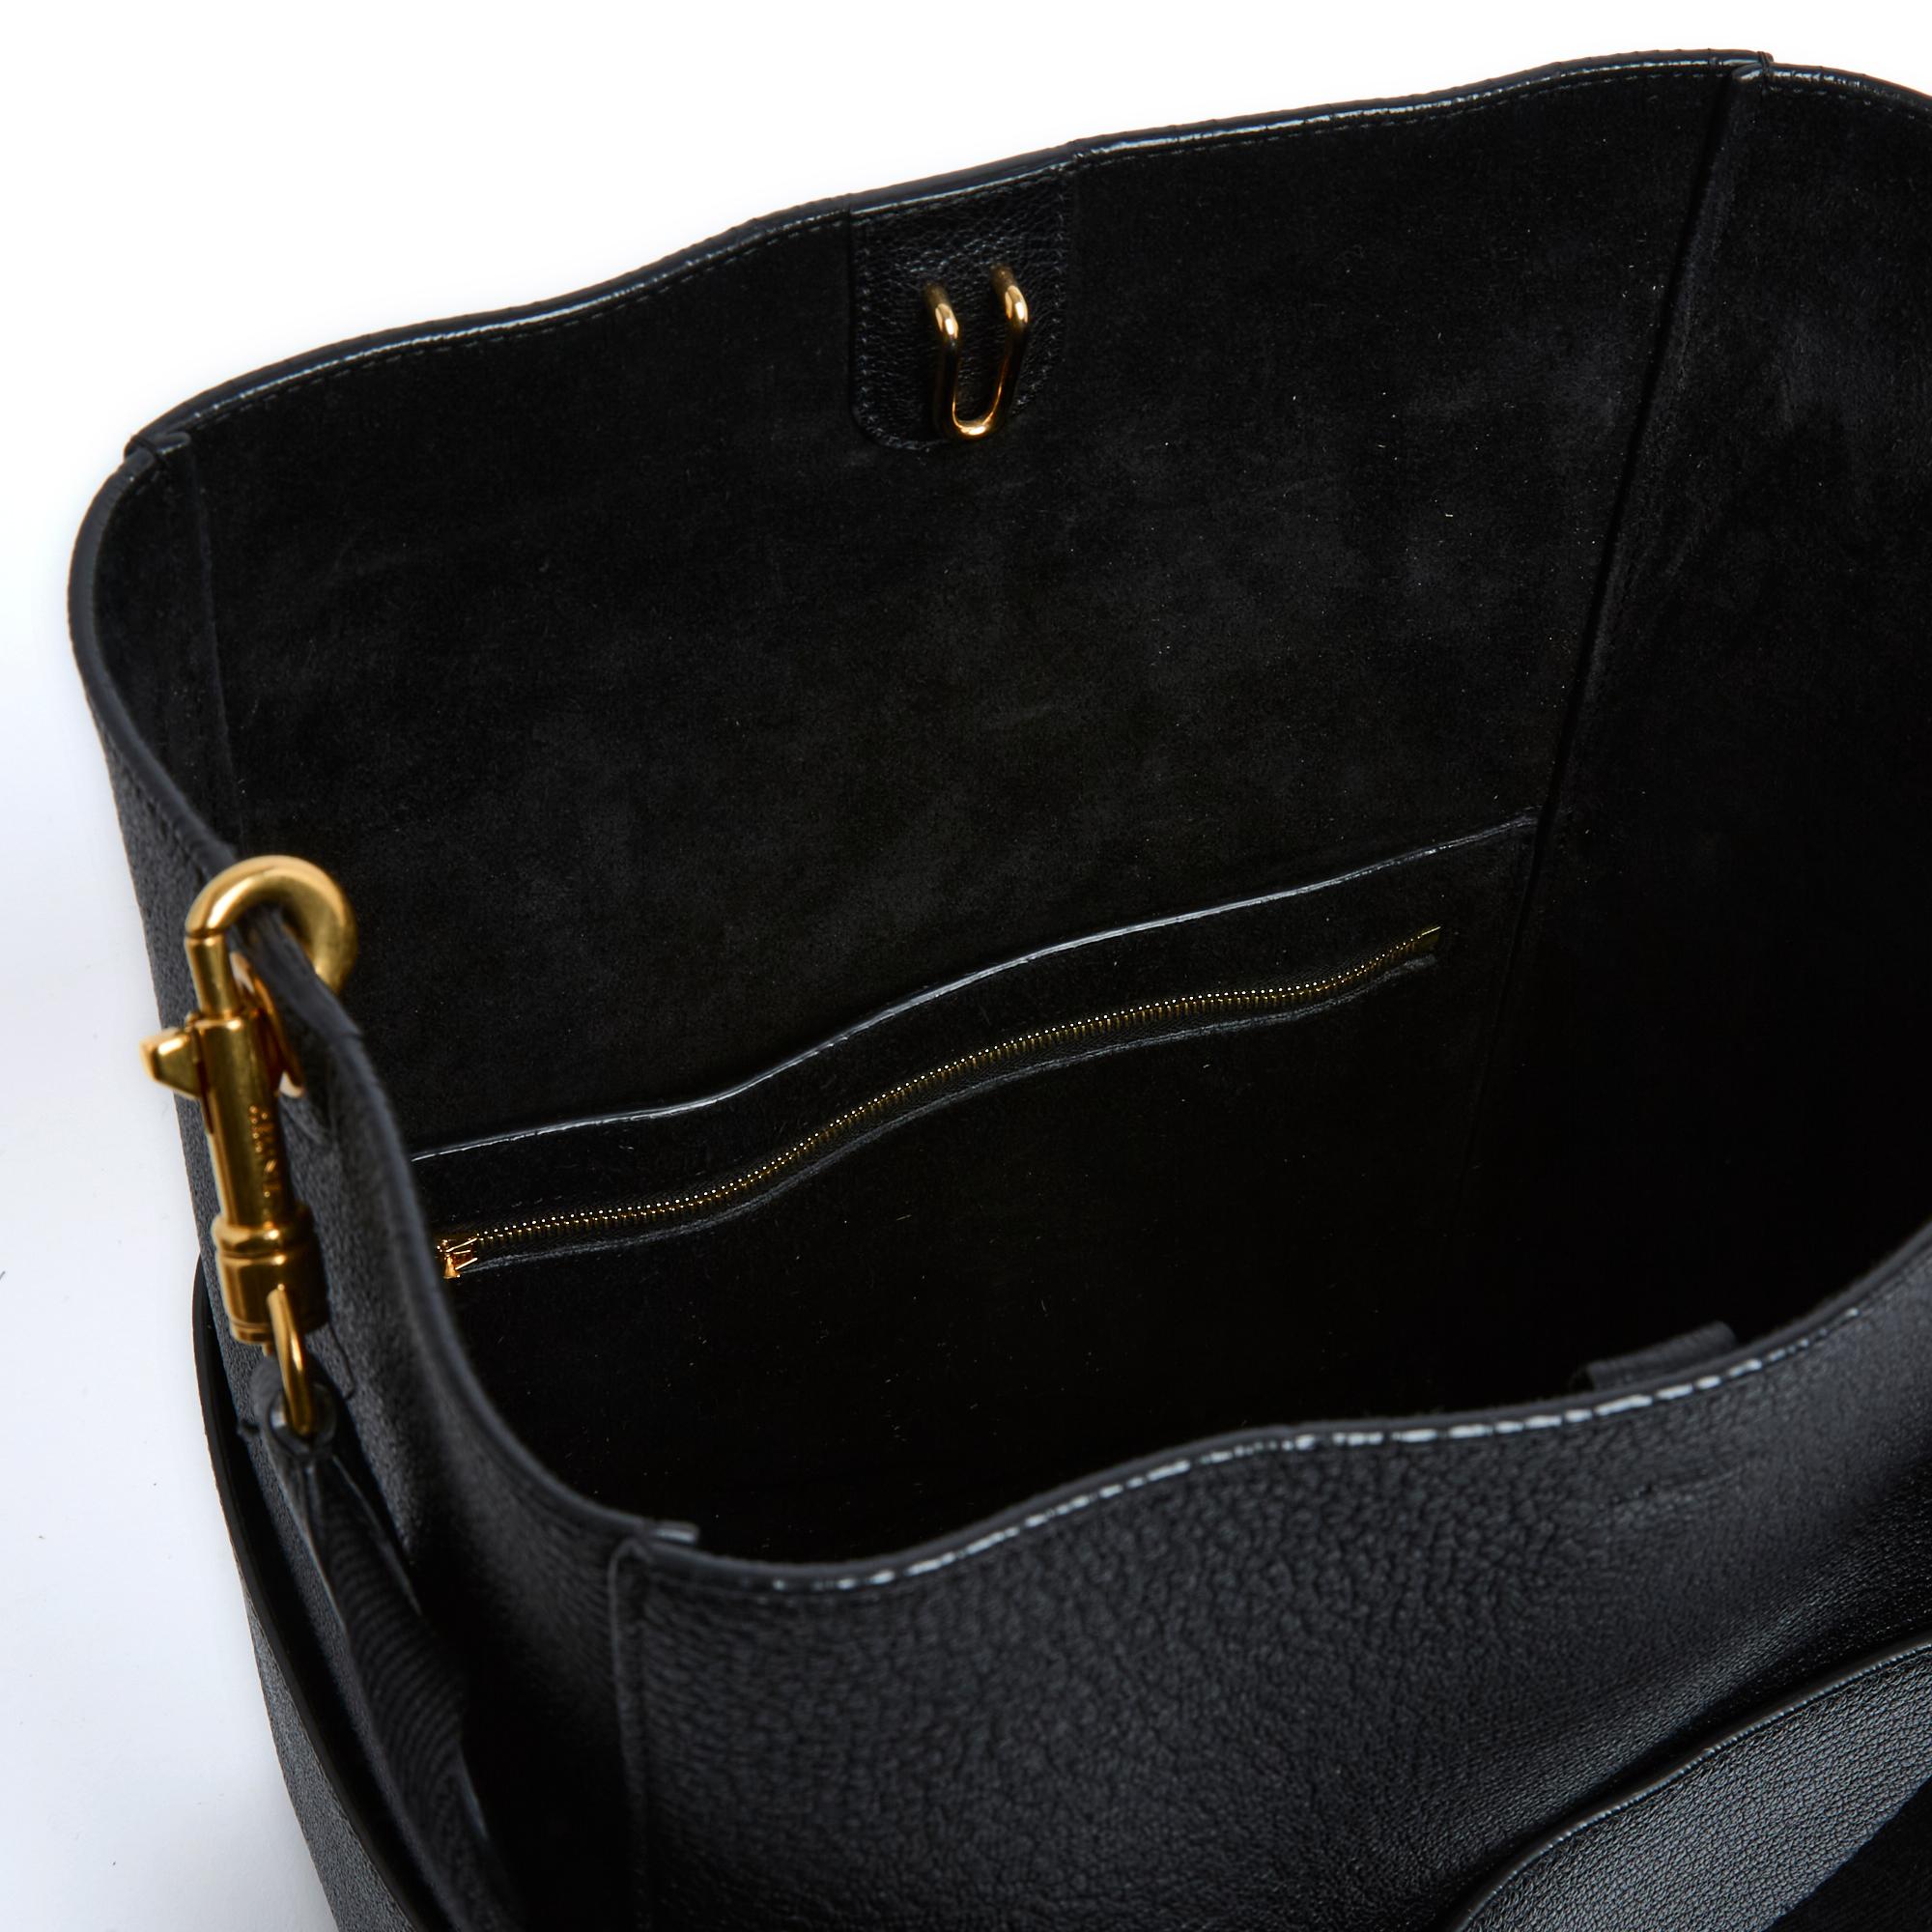 Sac Celine Sangle Black Bucket Bag de Phoebe Philo 3